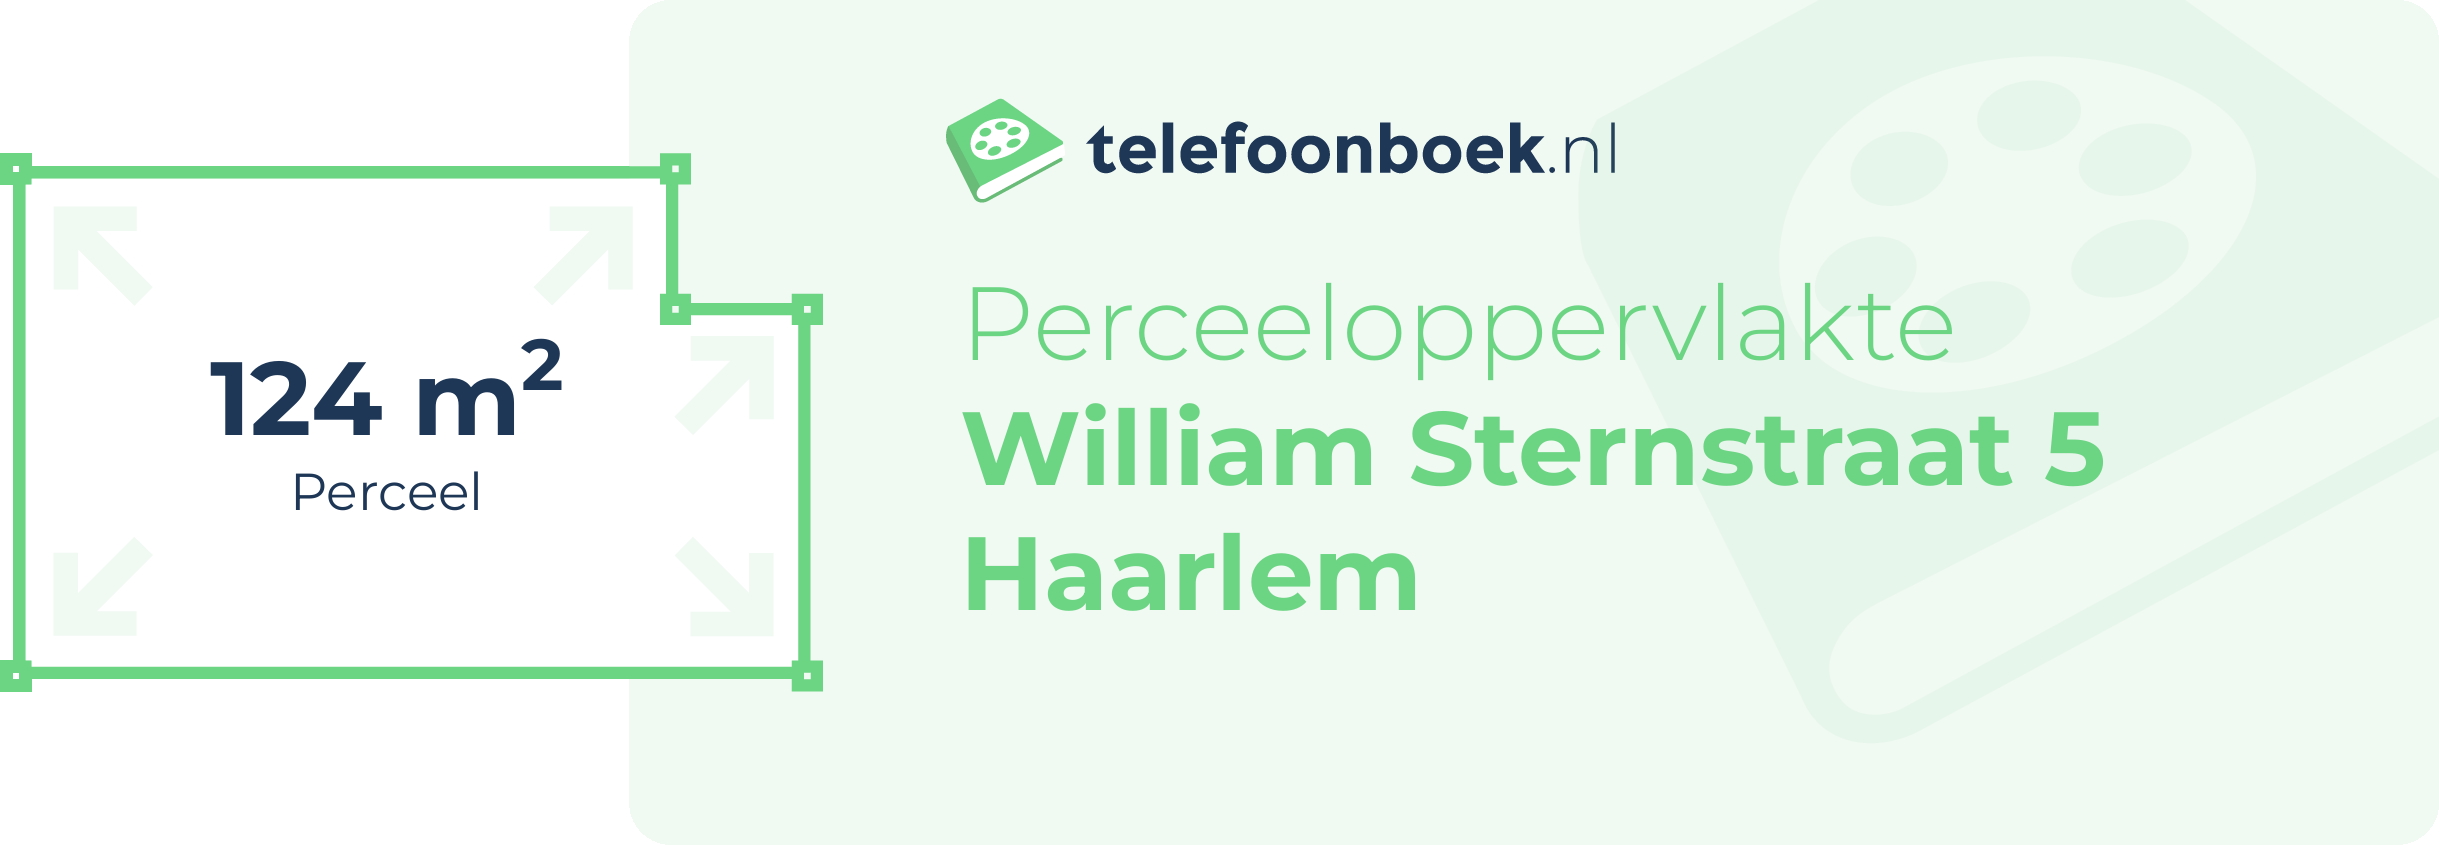 Perceeloppervlakte William Sternstraat 5 Haarlem